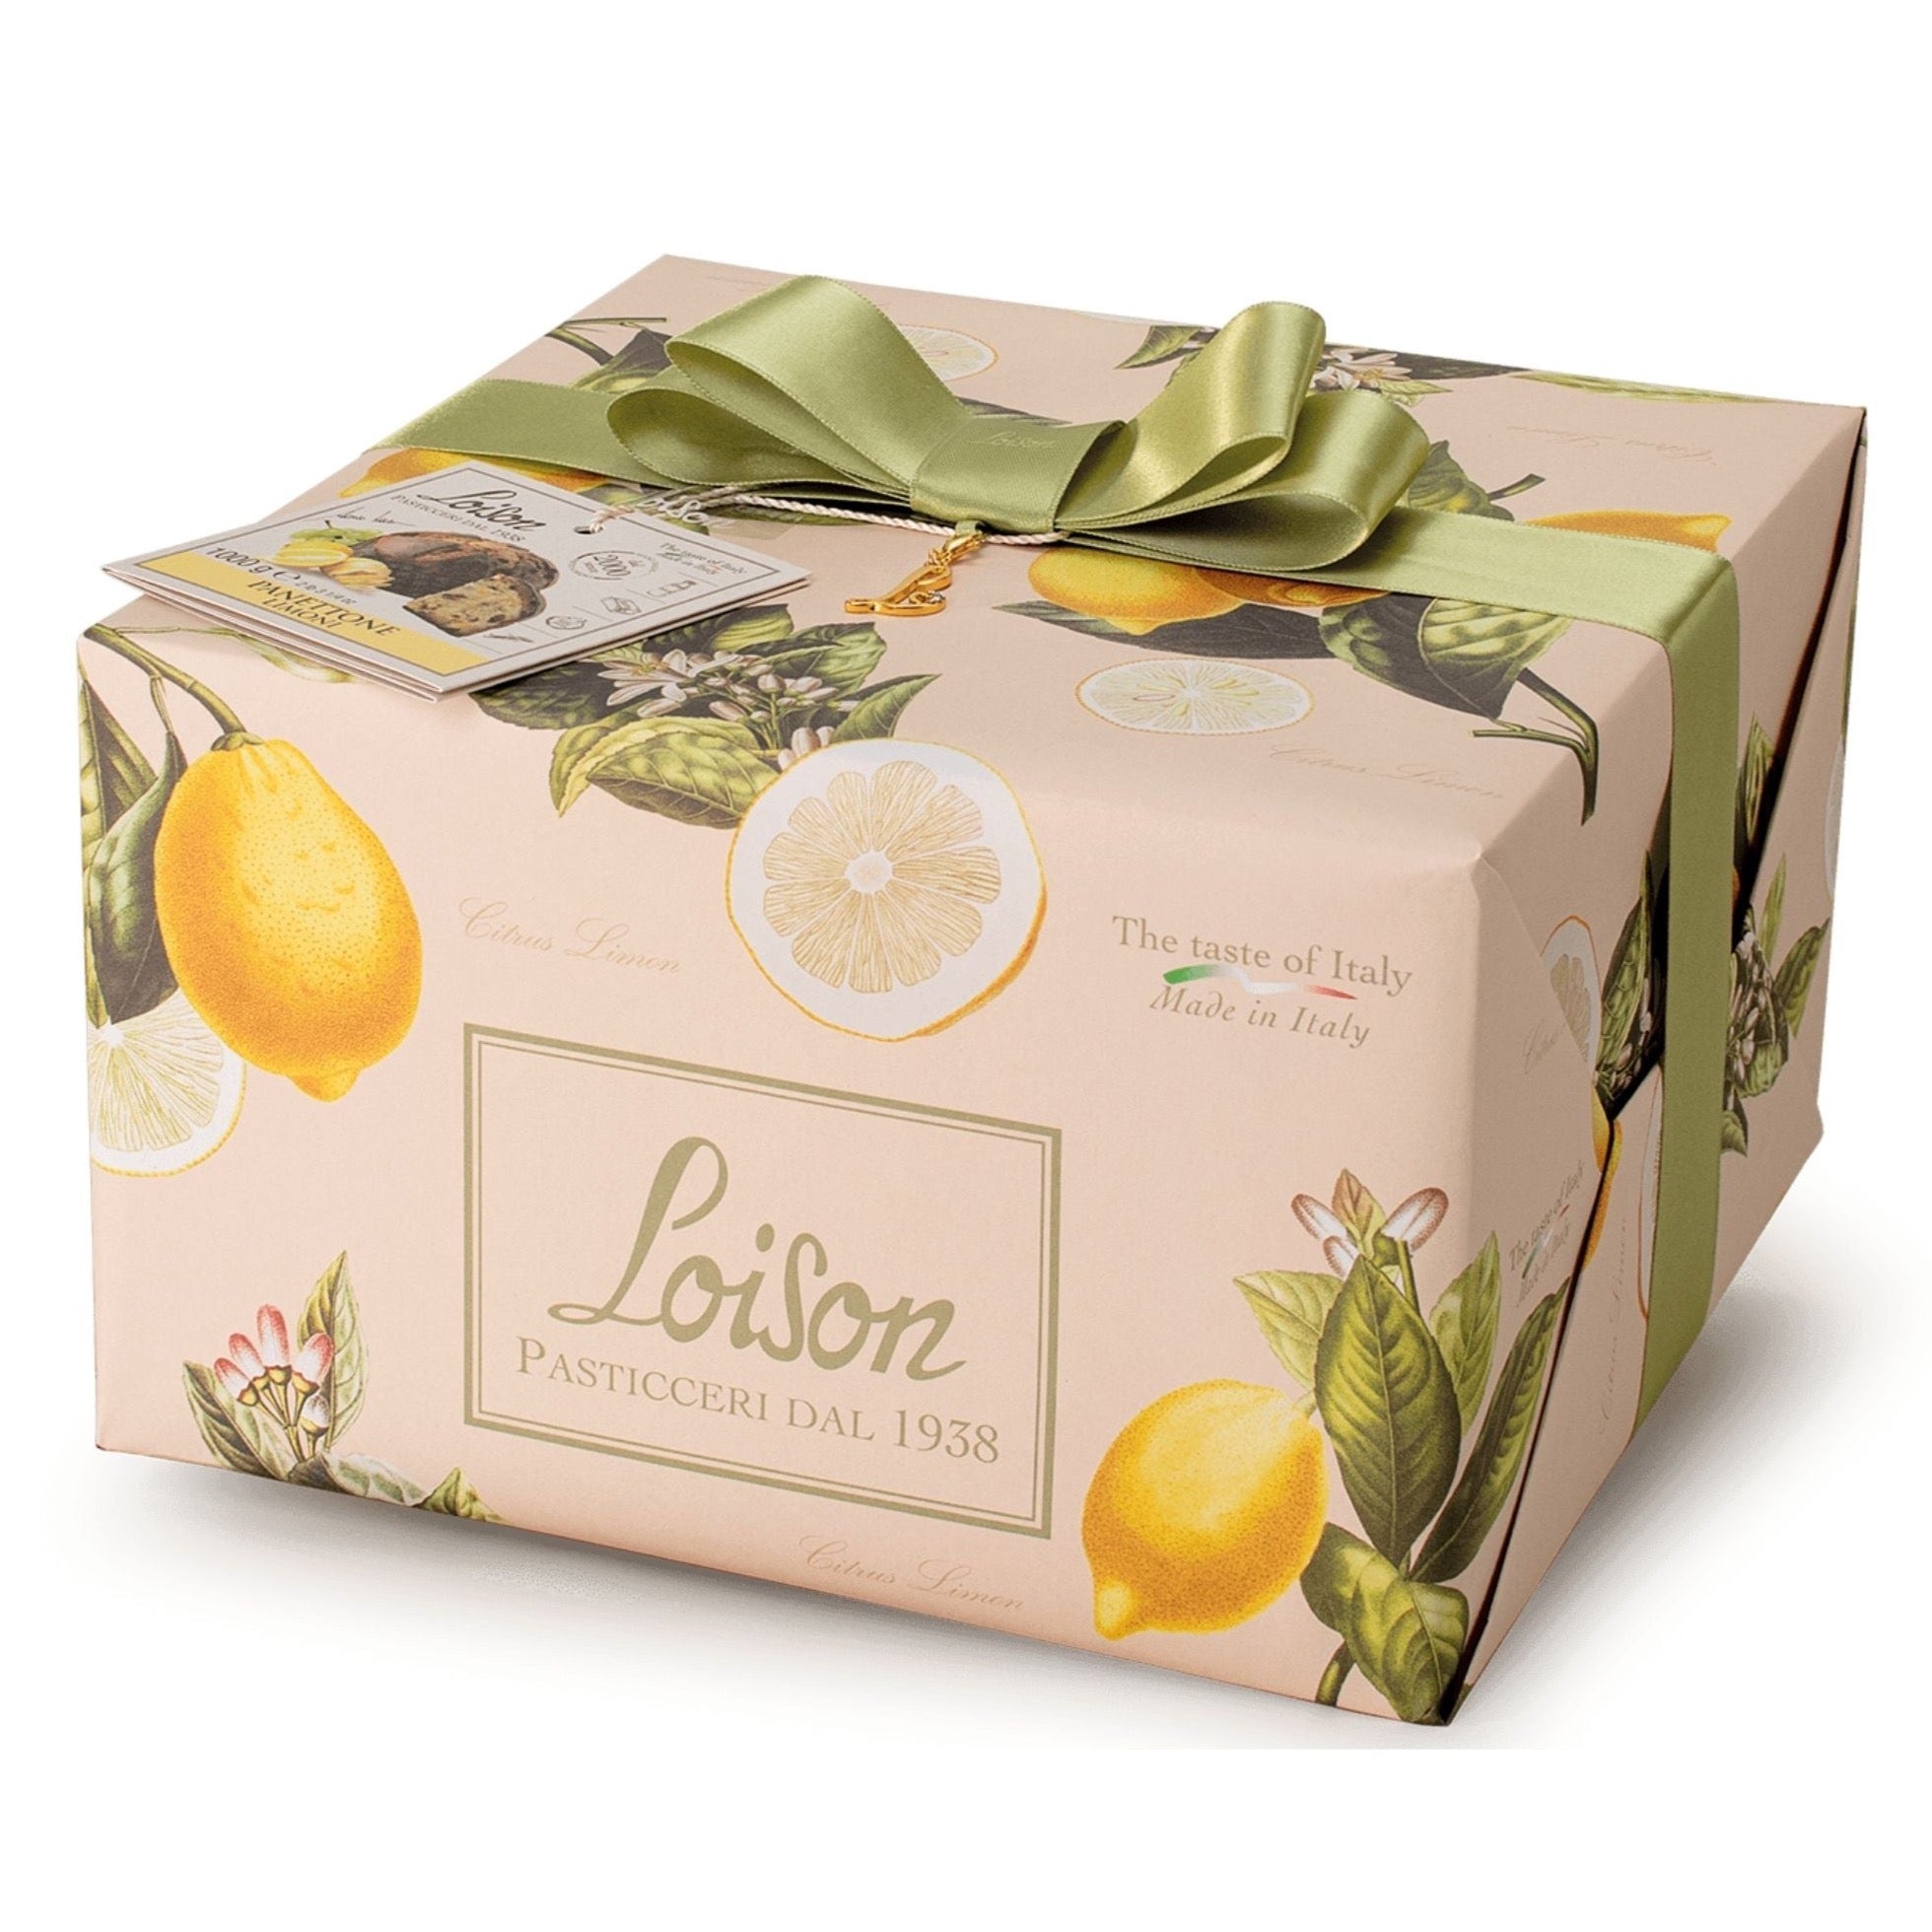 Loison Fiori & Frutti Collection Lemon Panettone 1kg Feast Italy